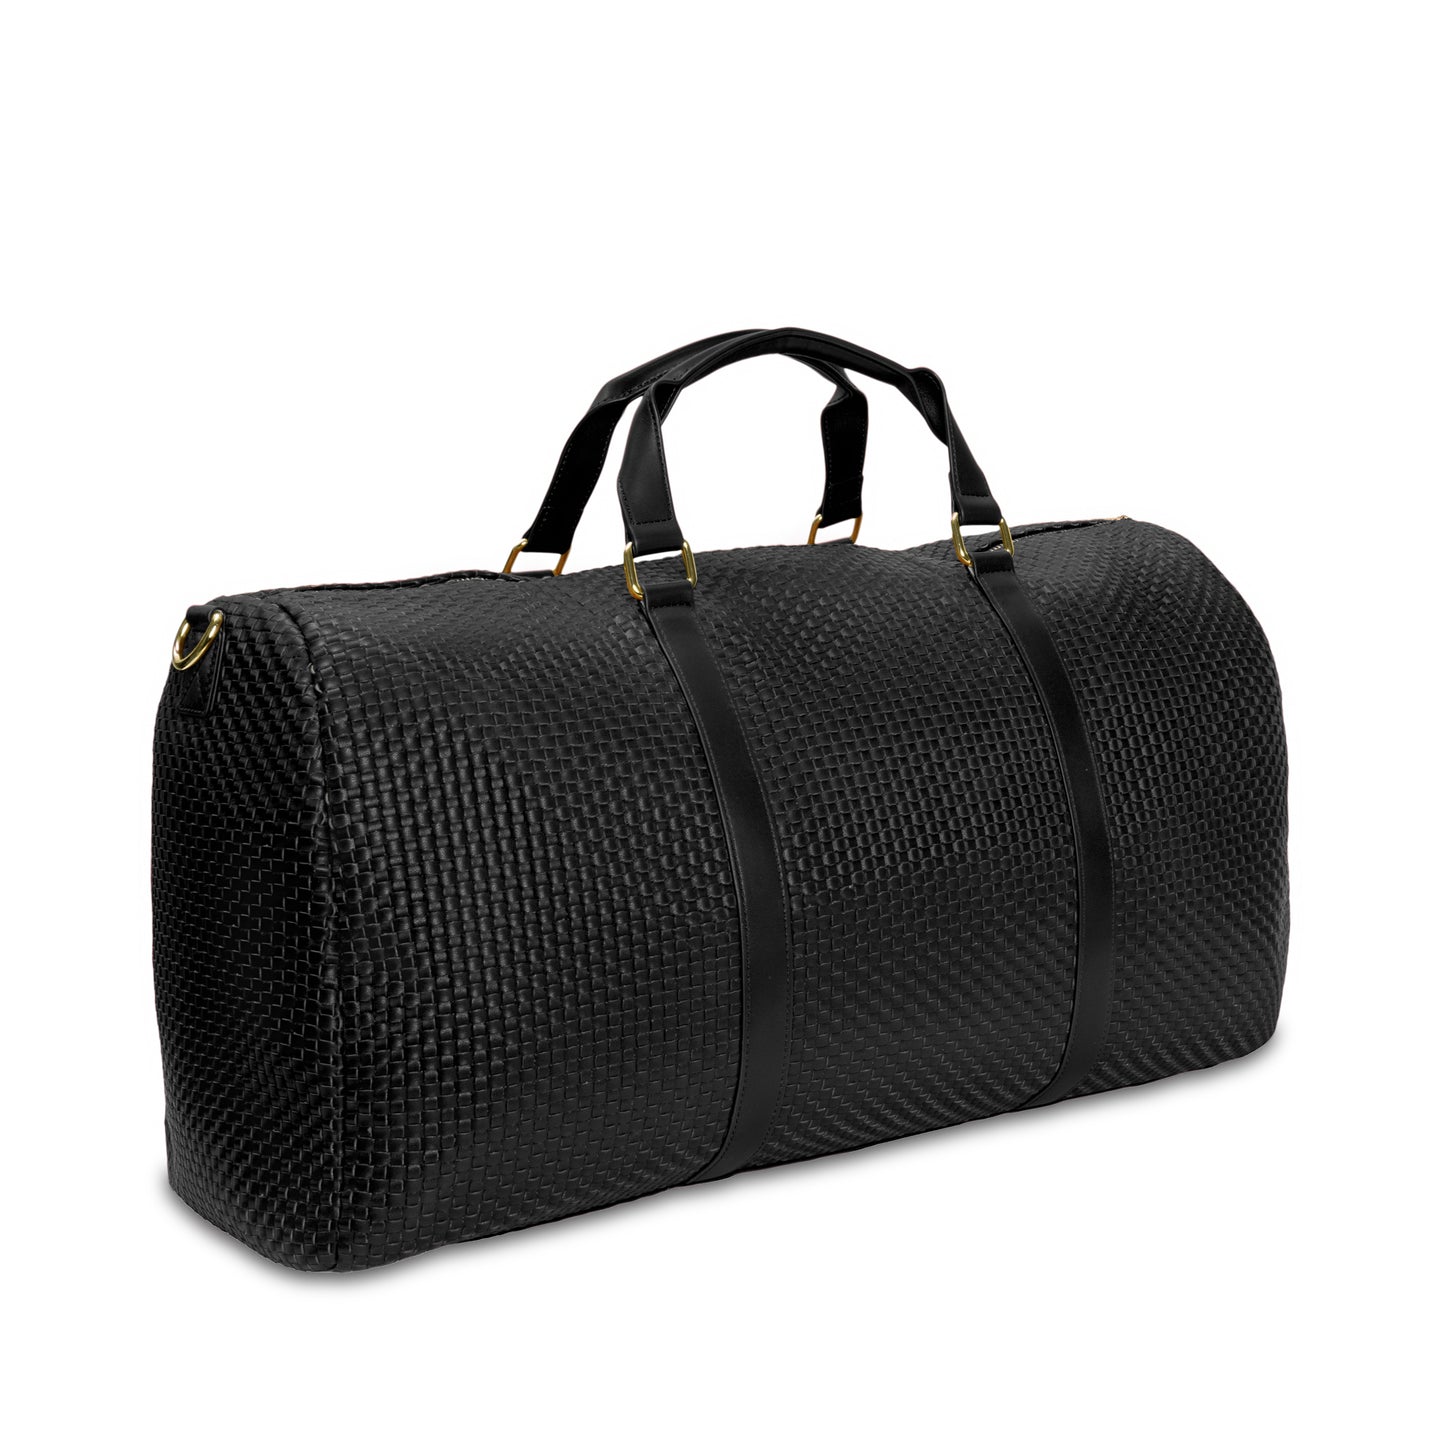 The Lisi Duffle Bag - Intense Black